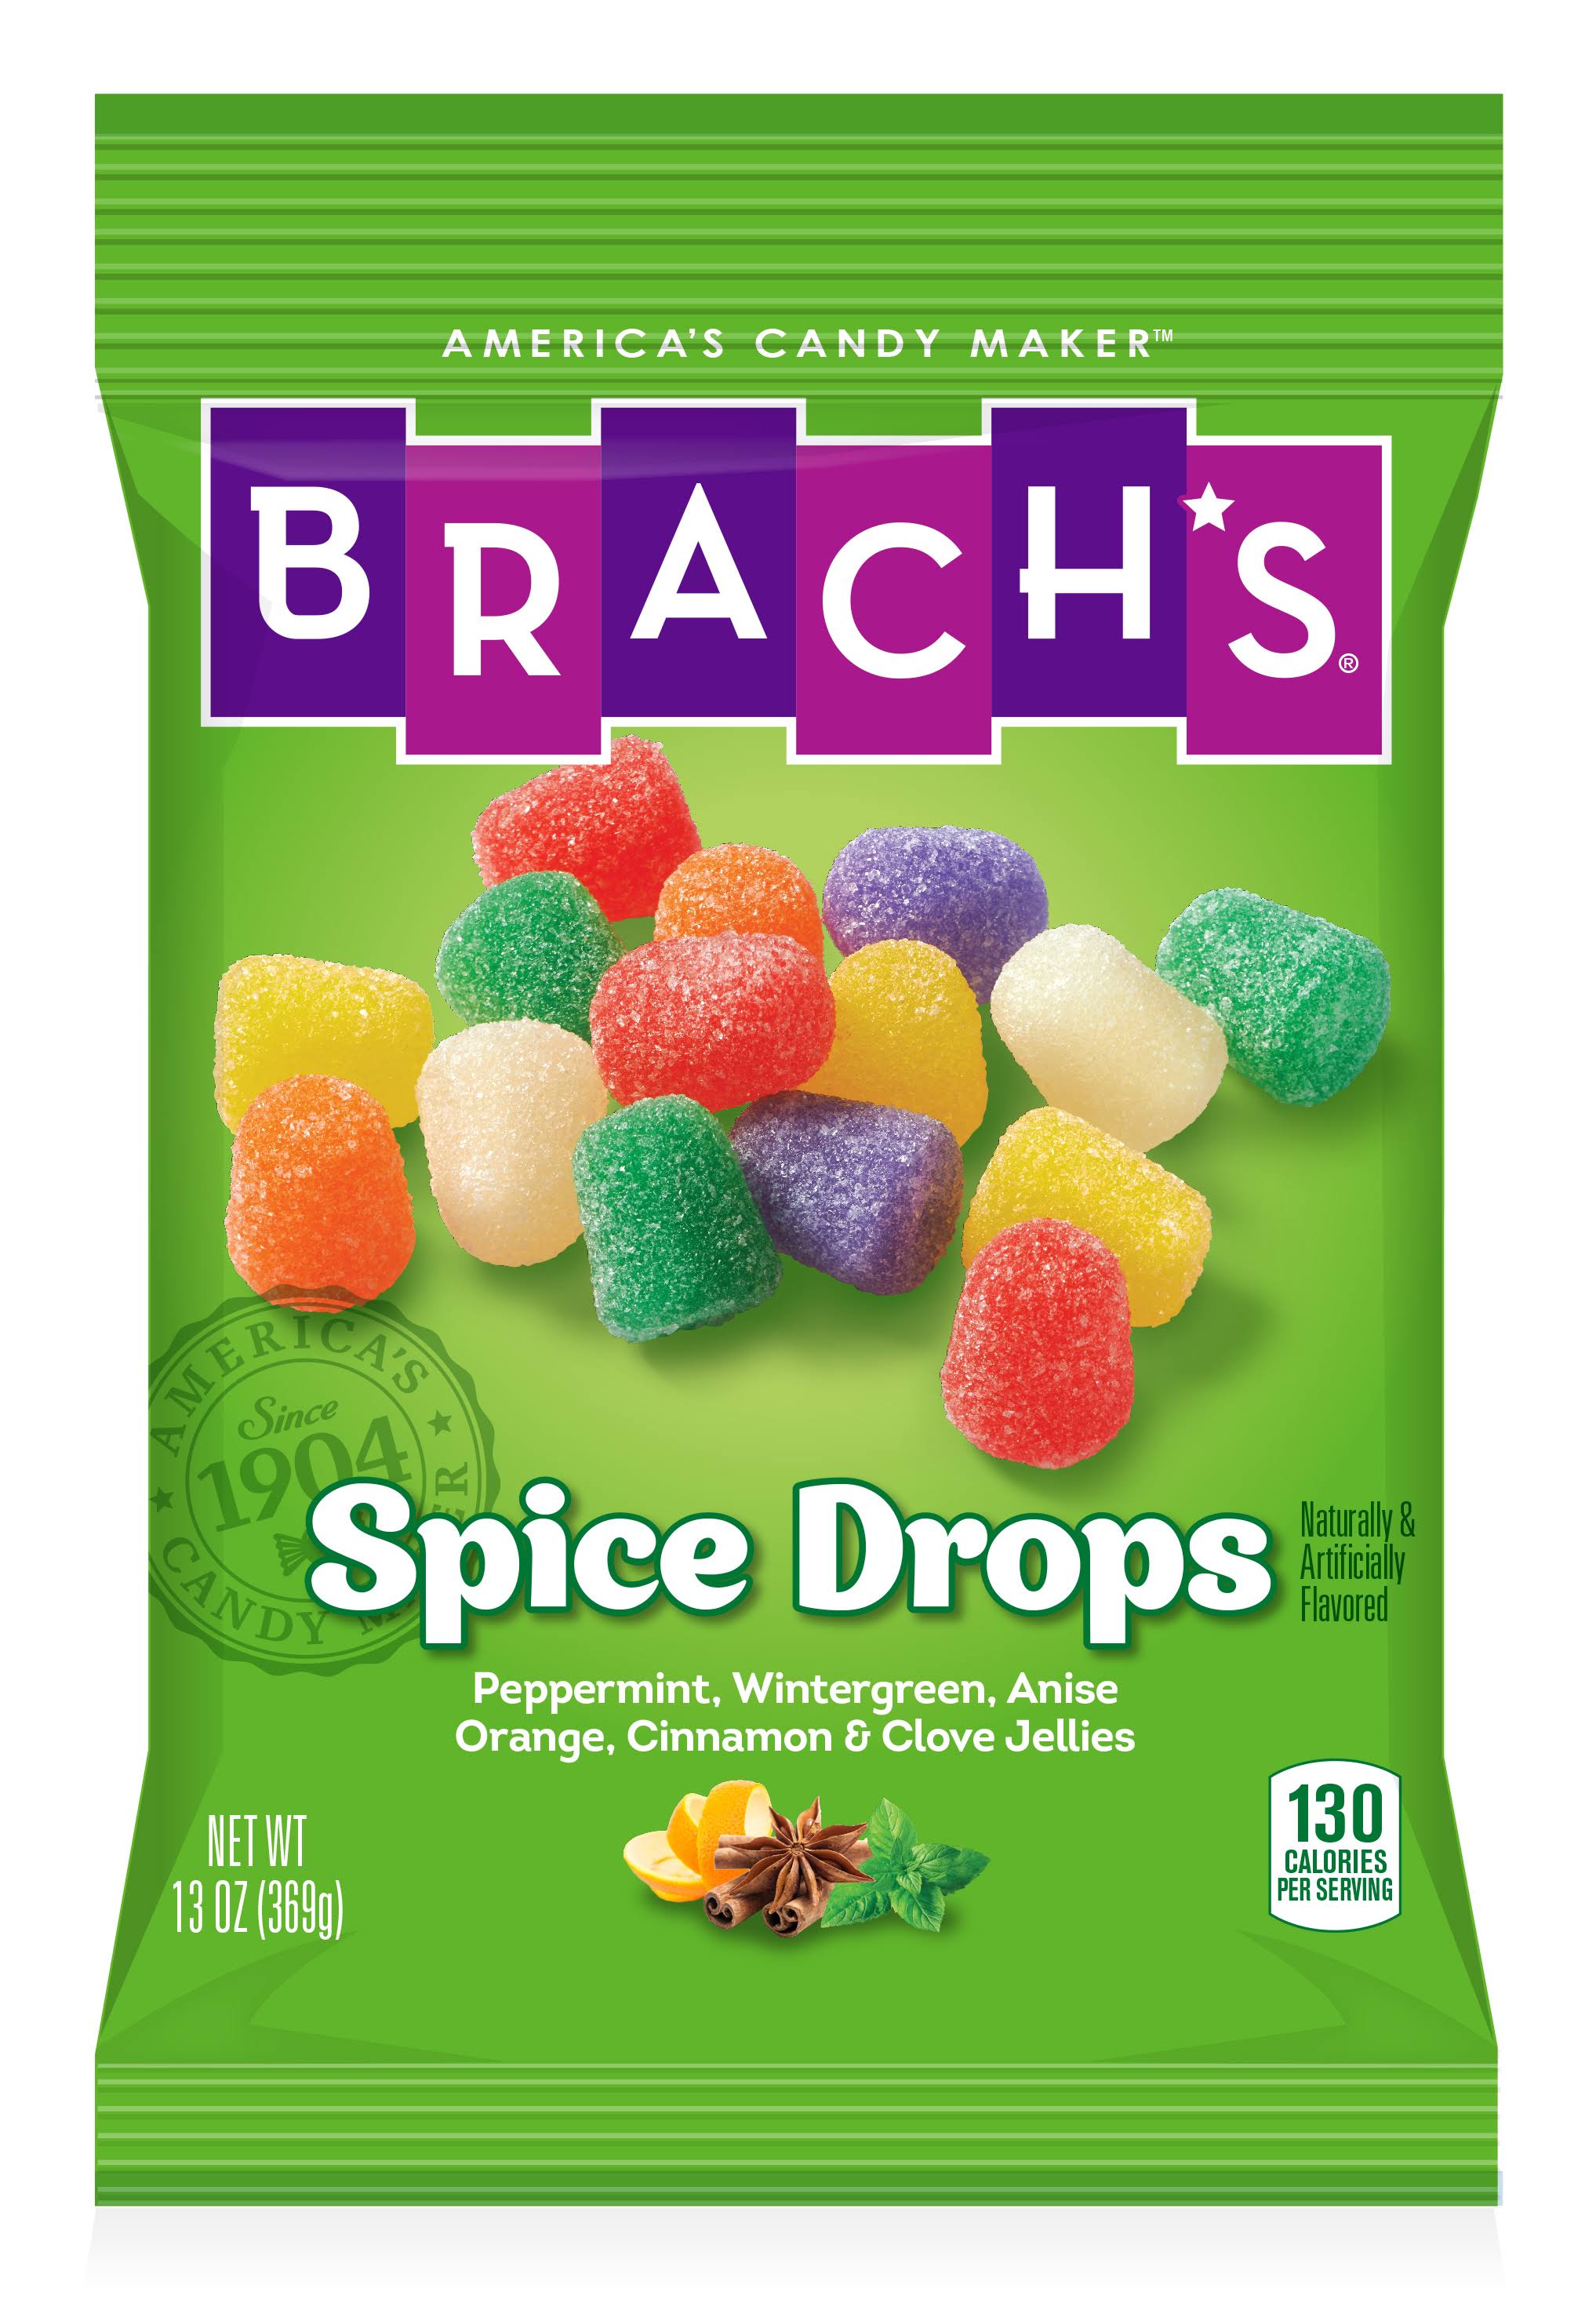 Brach's Spice Drops Candy - 13oz